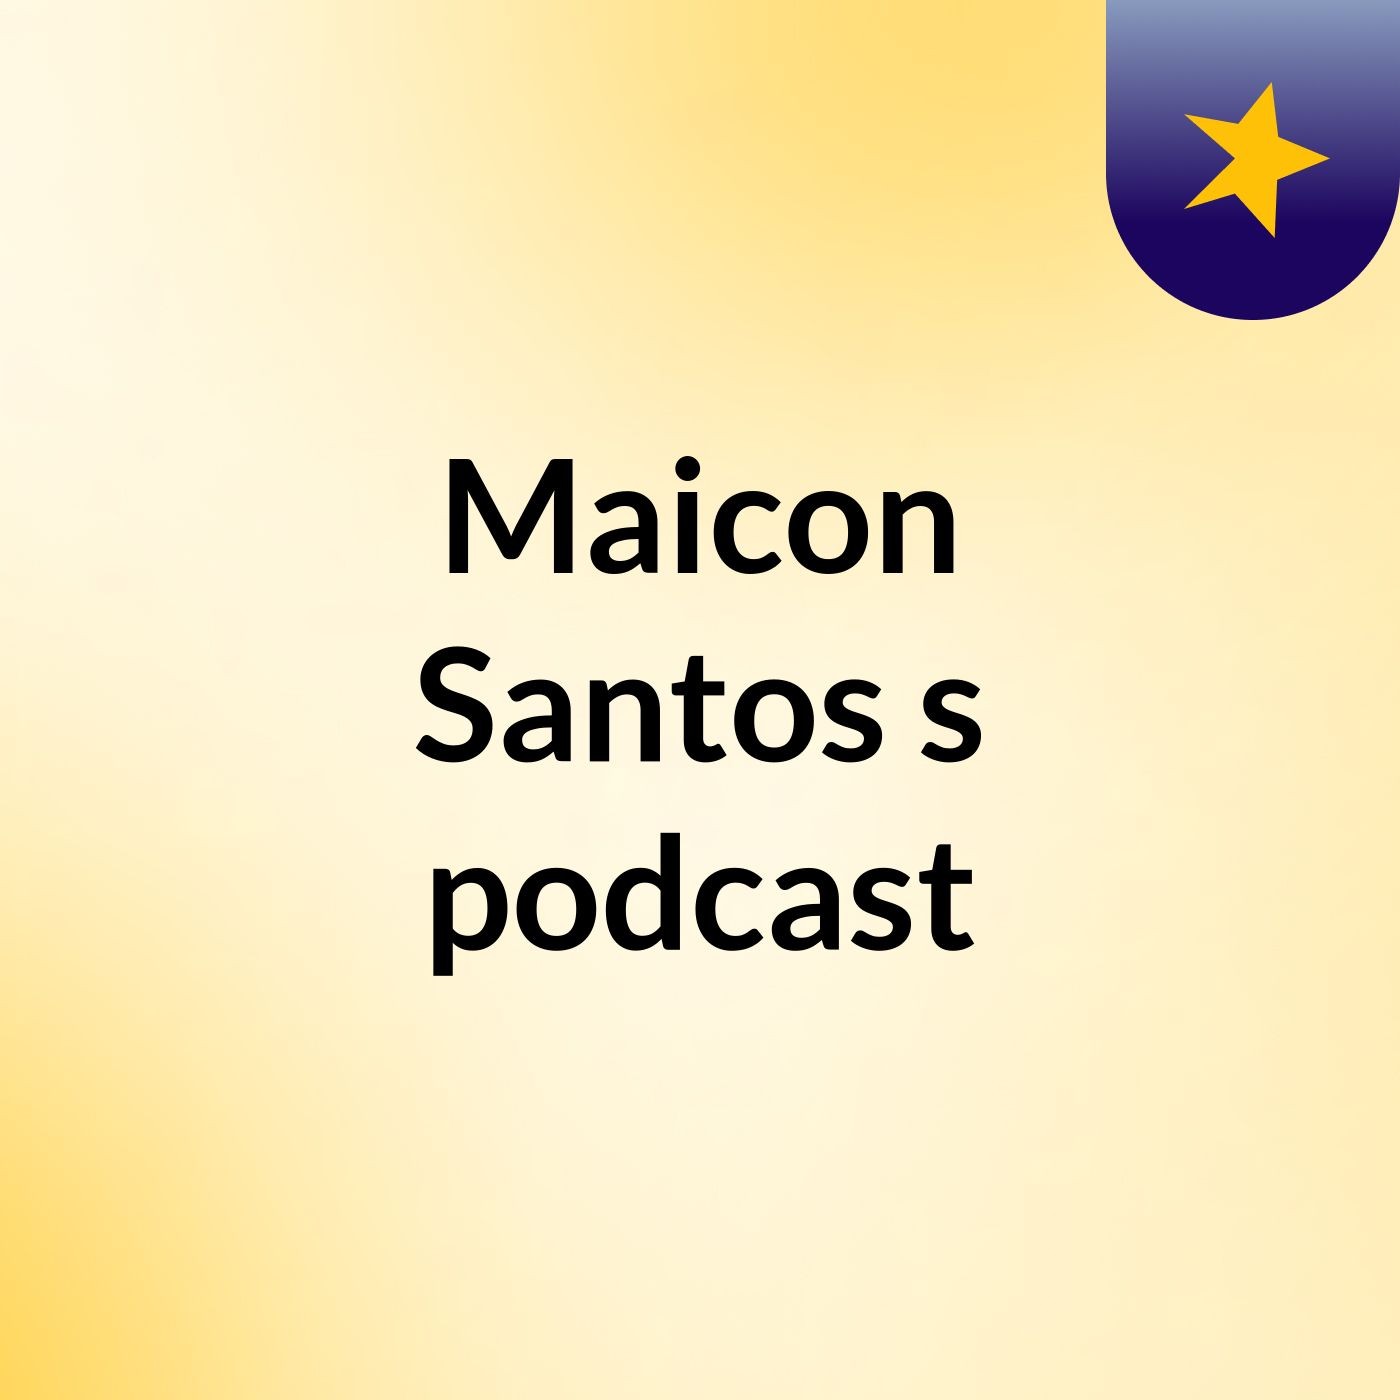 Maicon Santos's podcast